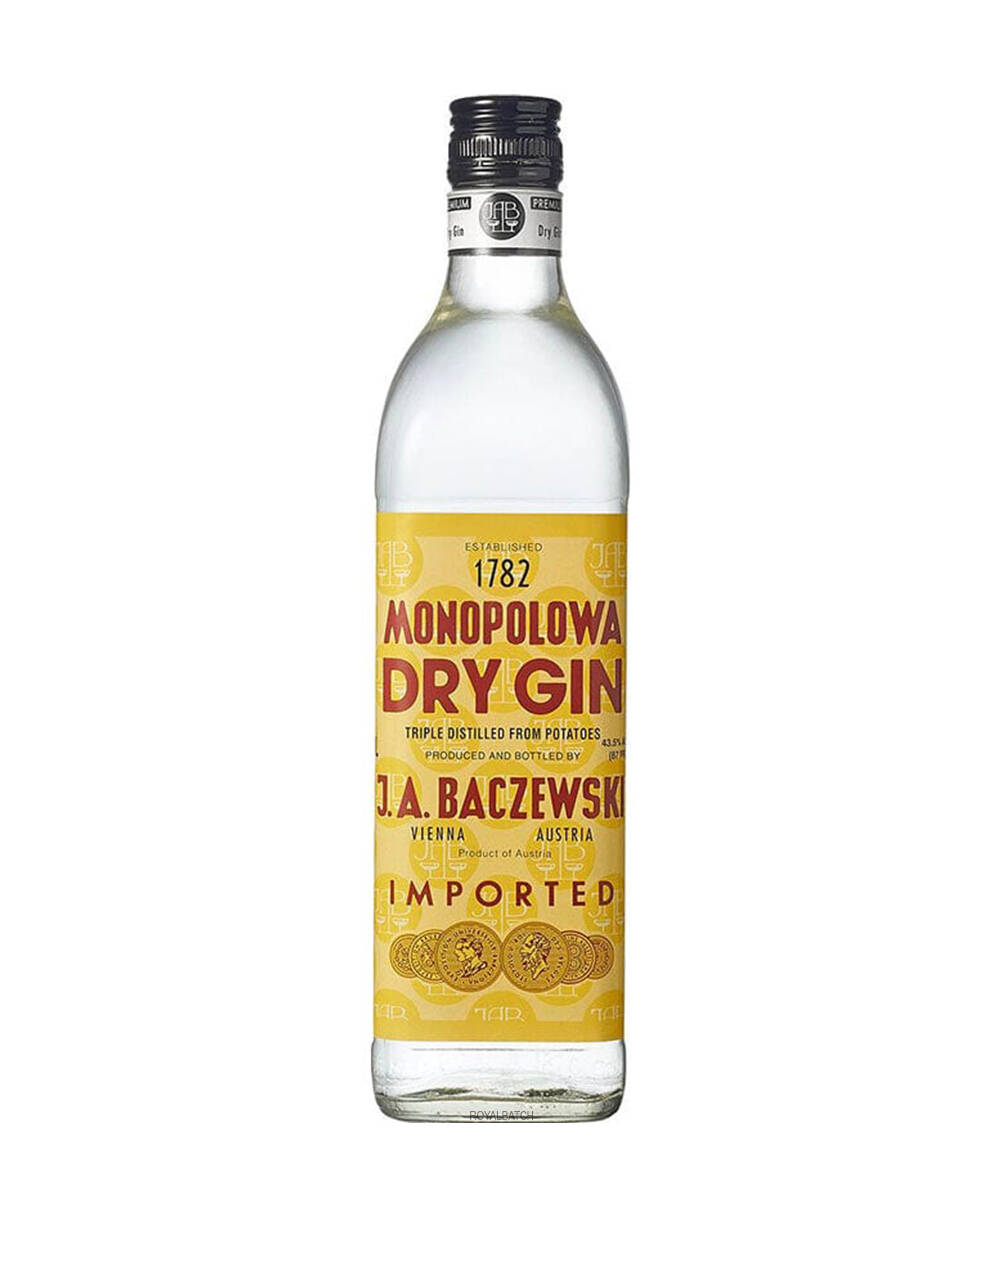 Monopolowa Dry gin